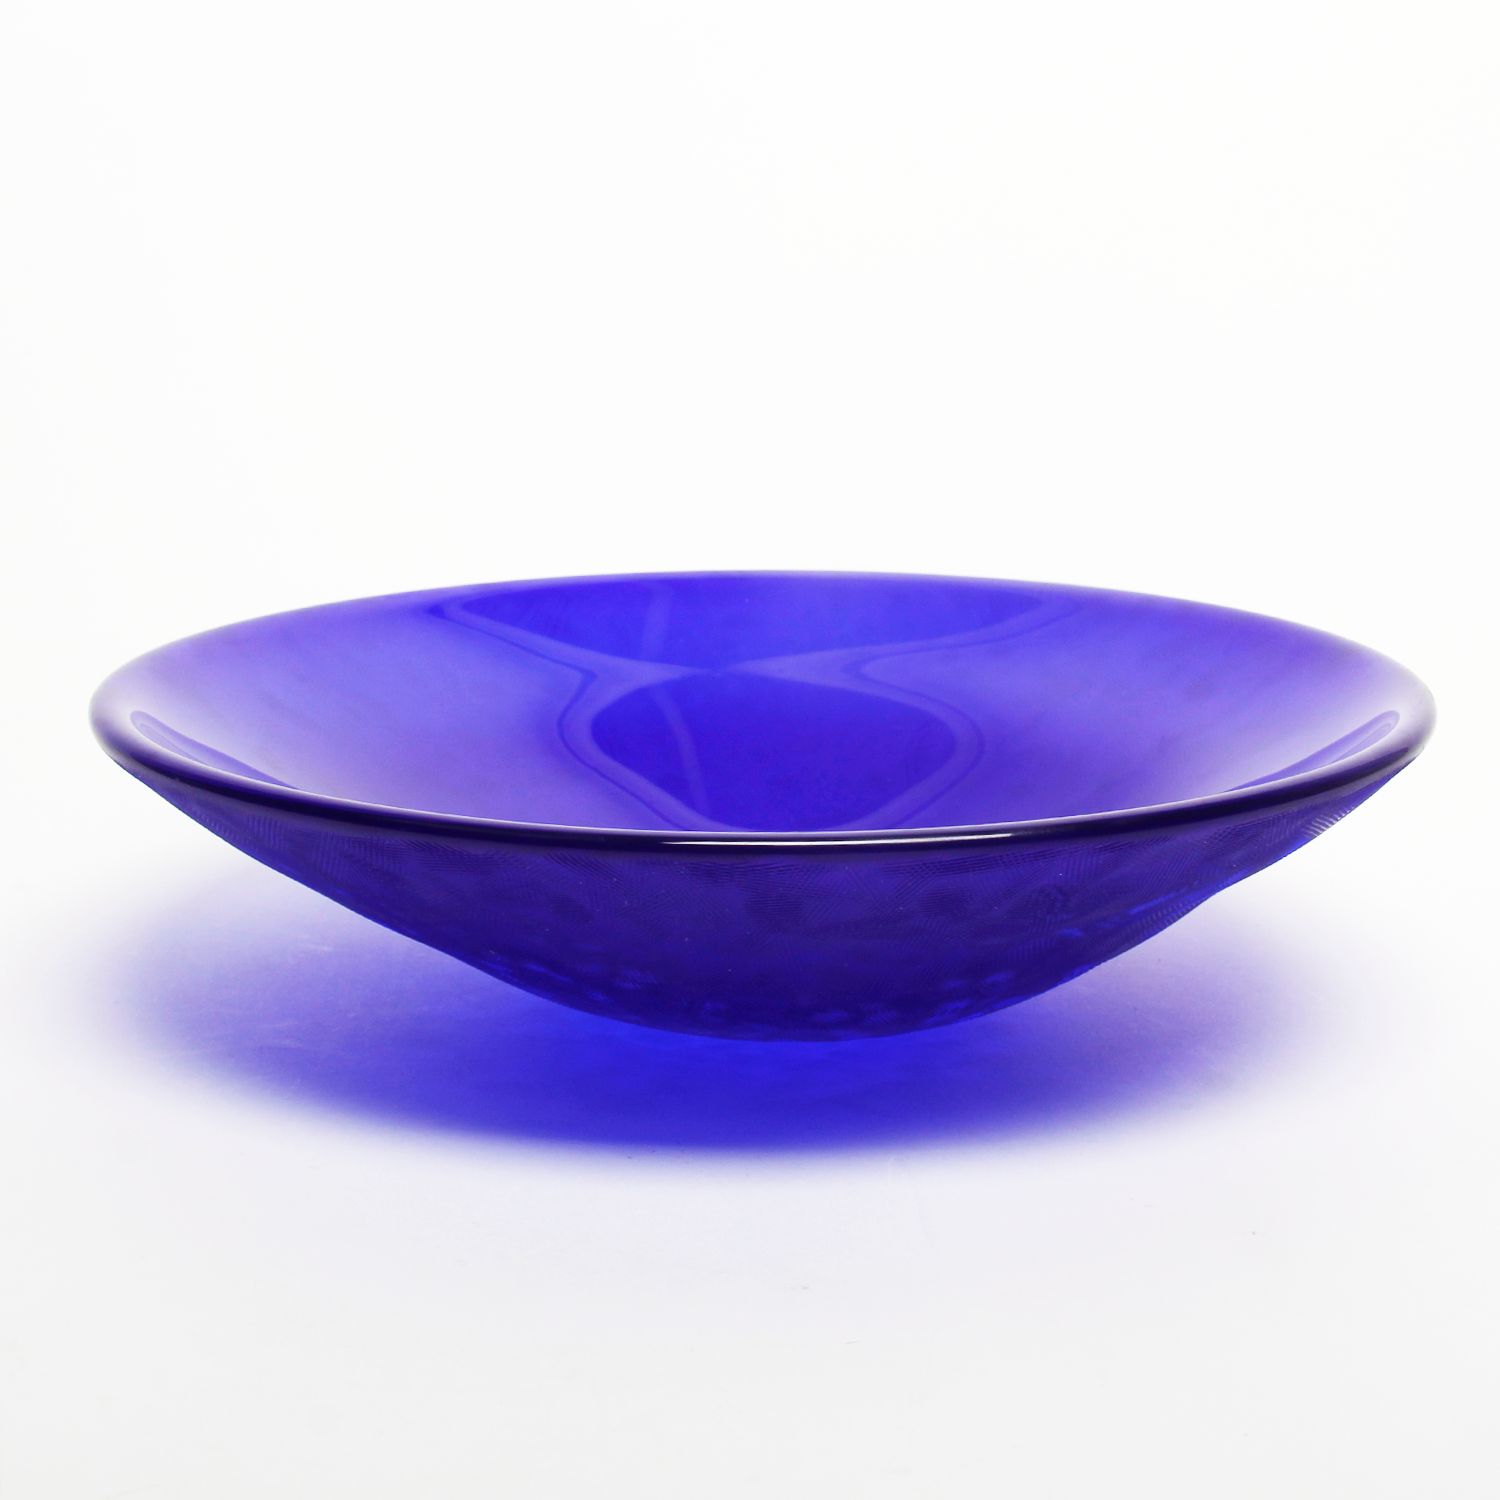 Gordon Boyd: Crosshatch Bowl in Blue Product Image 1 of 3